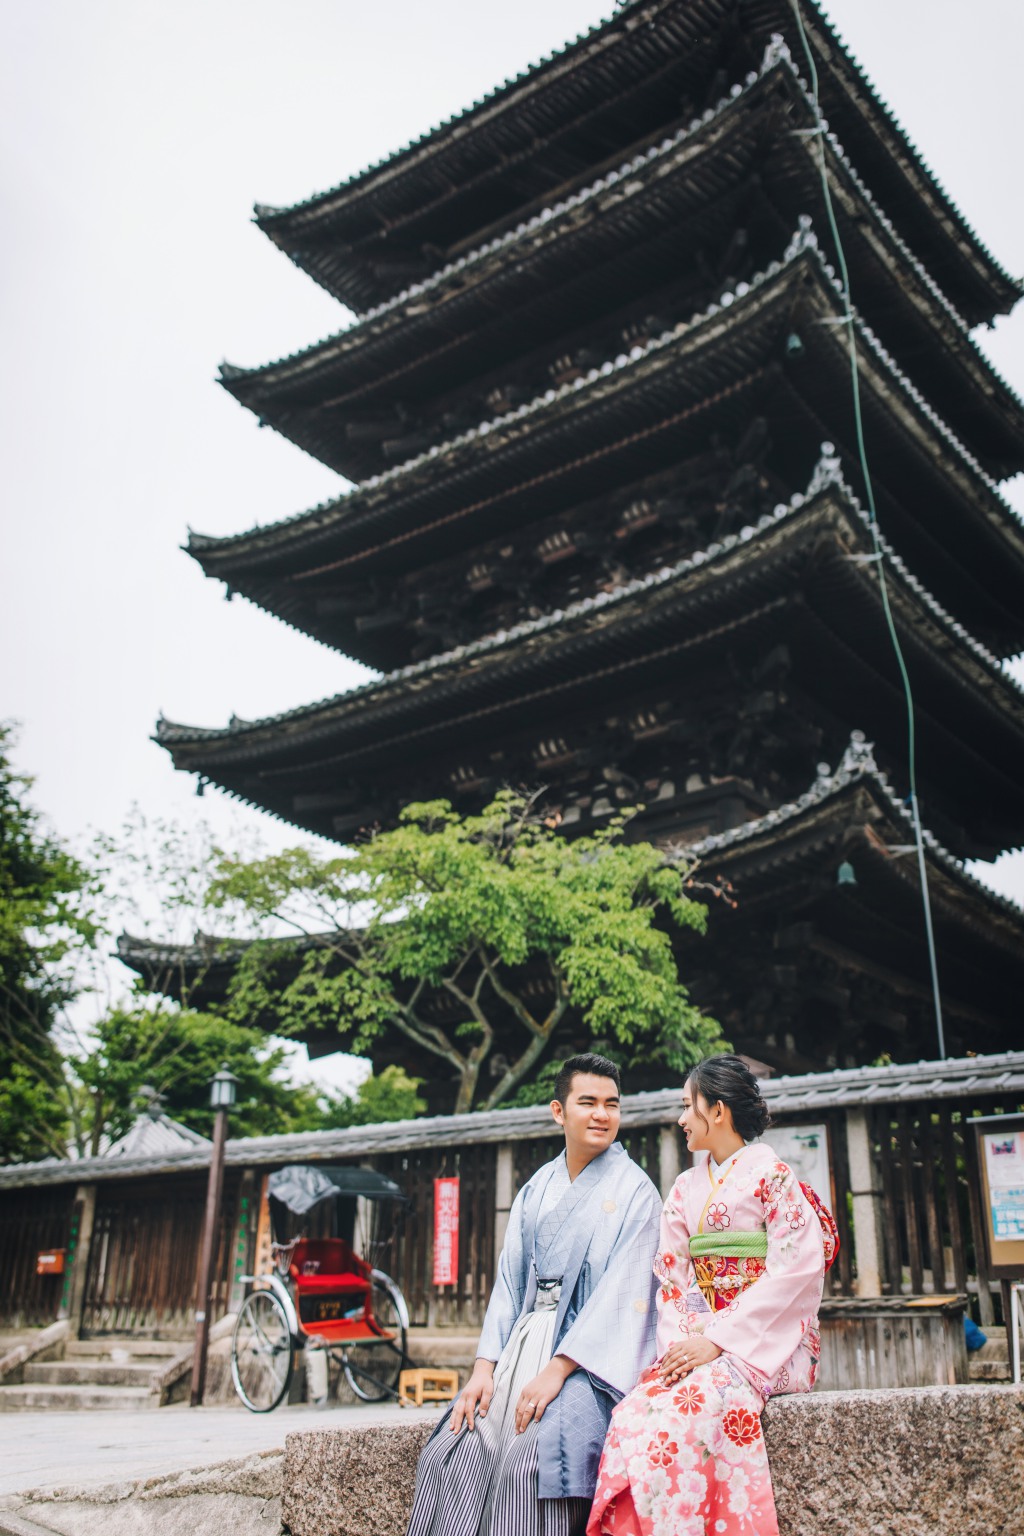 Japan Kyoto Photographer: Kimono And Couple Photoshoot At Kyoto Gion District  by Shu Hao  on OneThreeOneFour 14